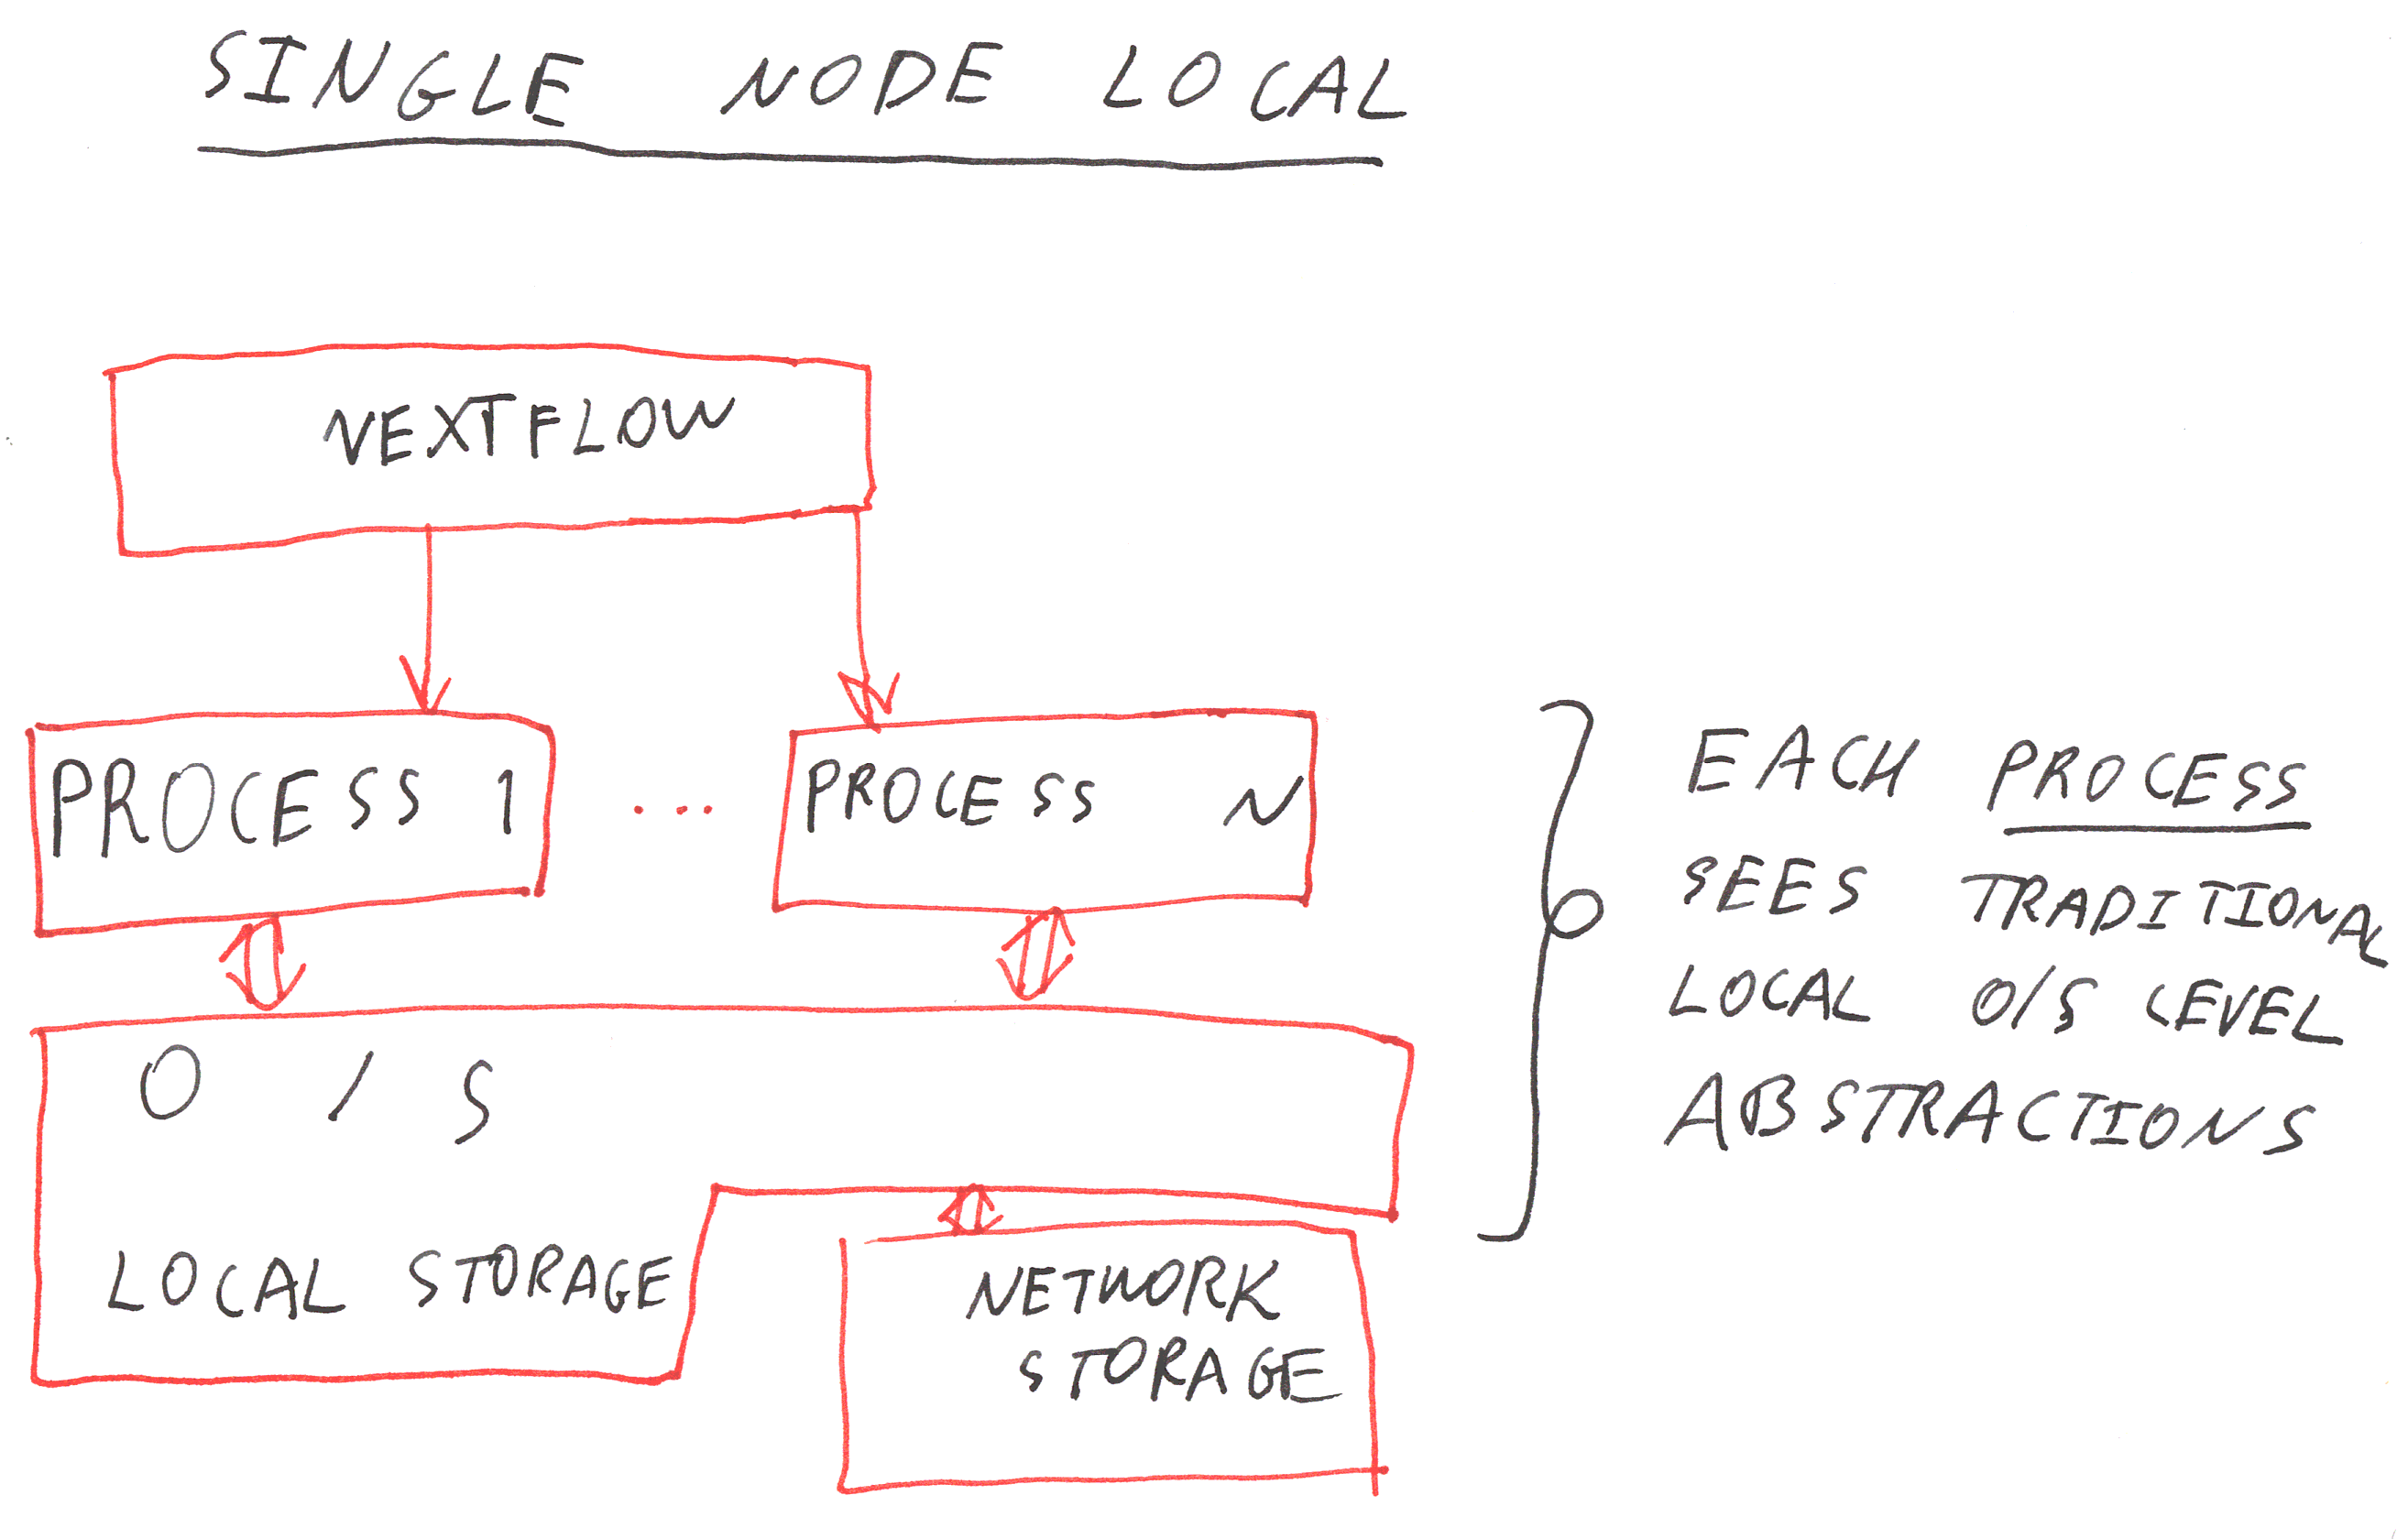 Single node execution model